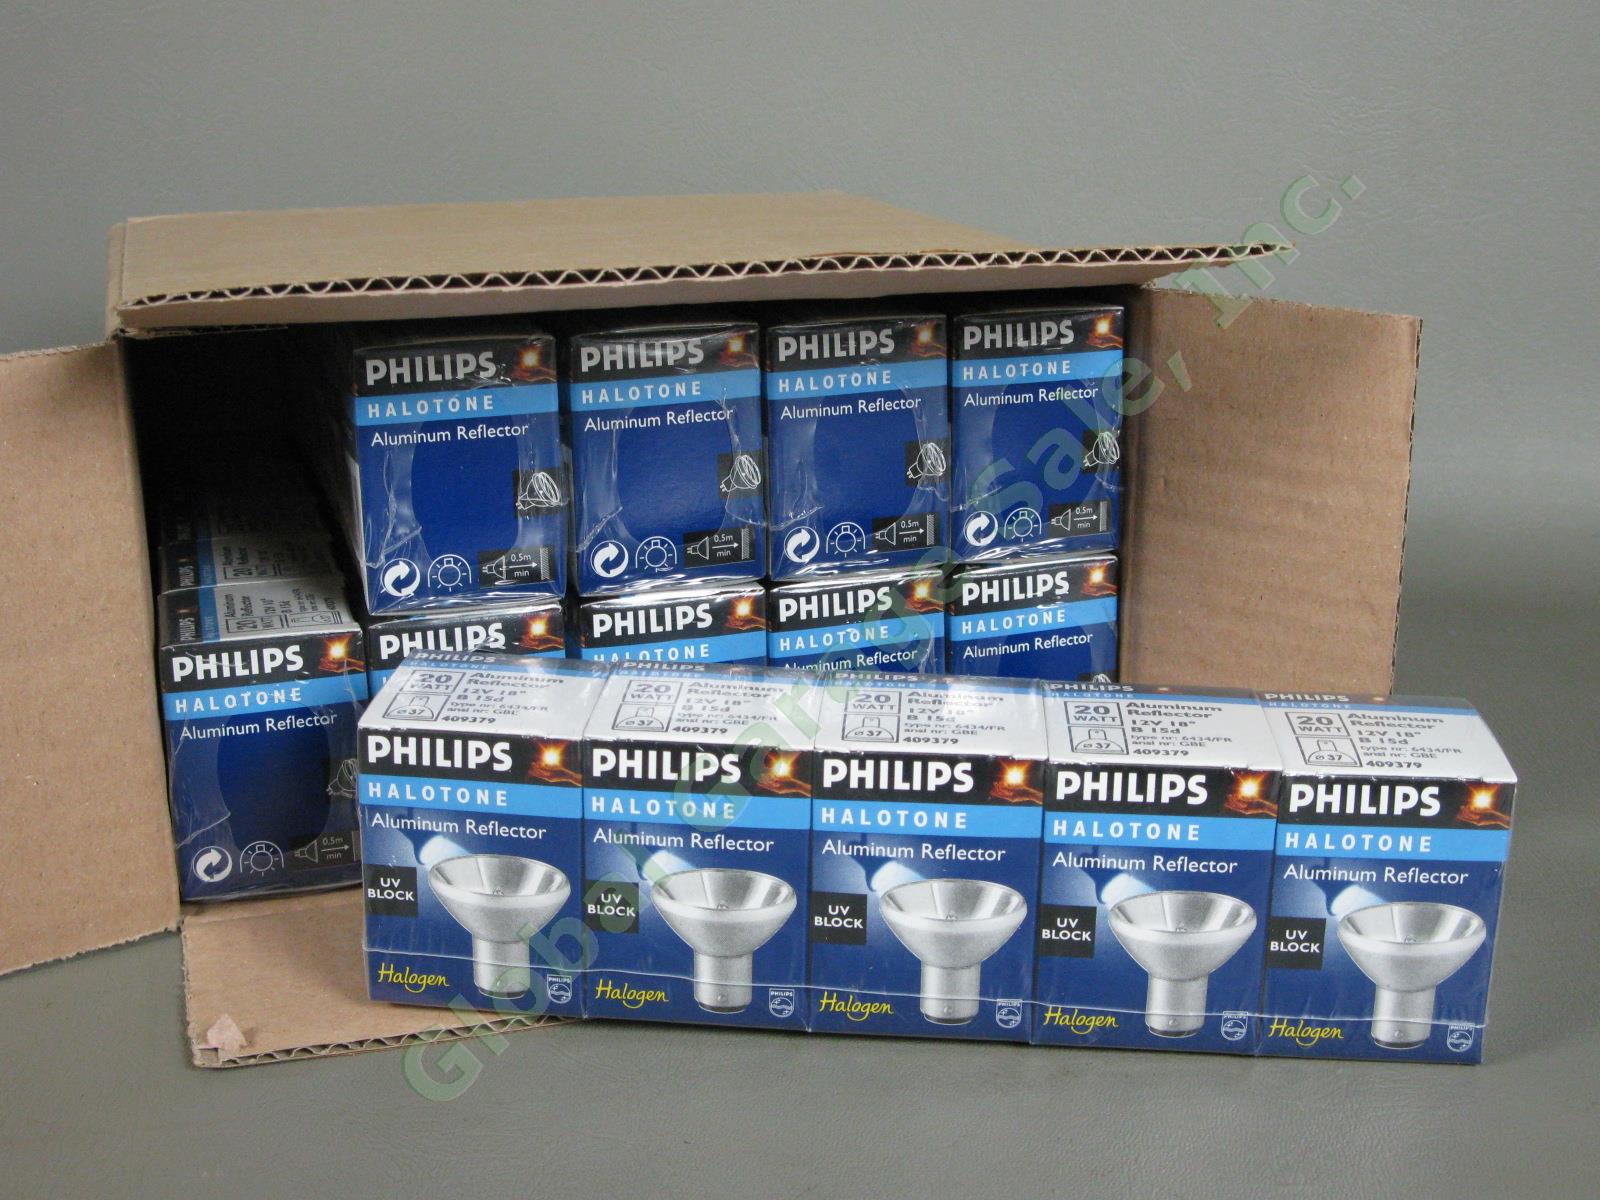 50 NEW Philips Halotone Light Bulb Lot 20w 12v UV Block 6434/FR Frosted 18° NR